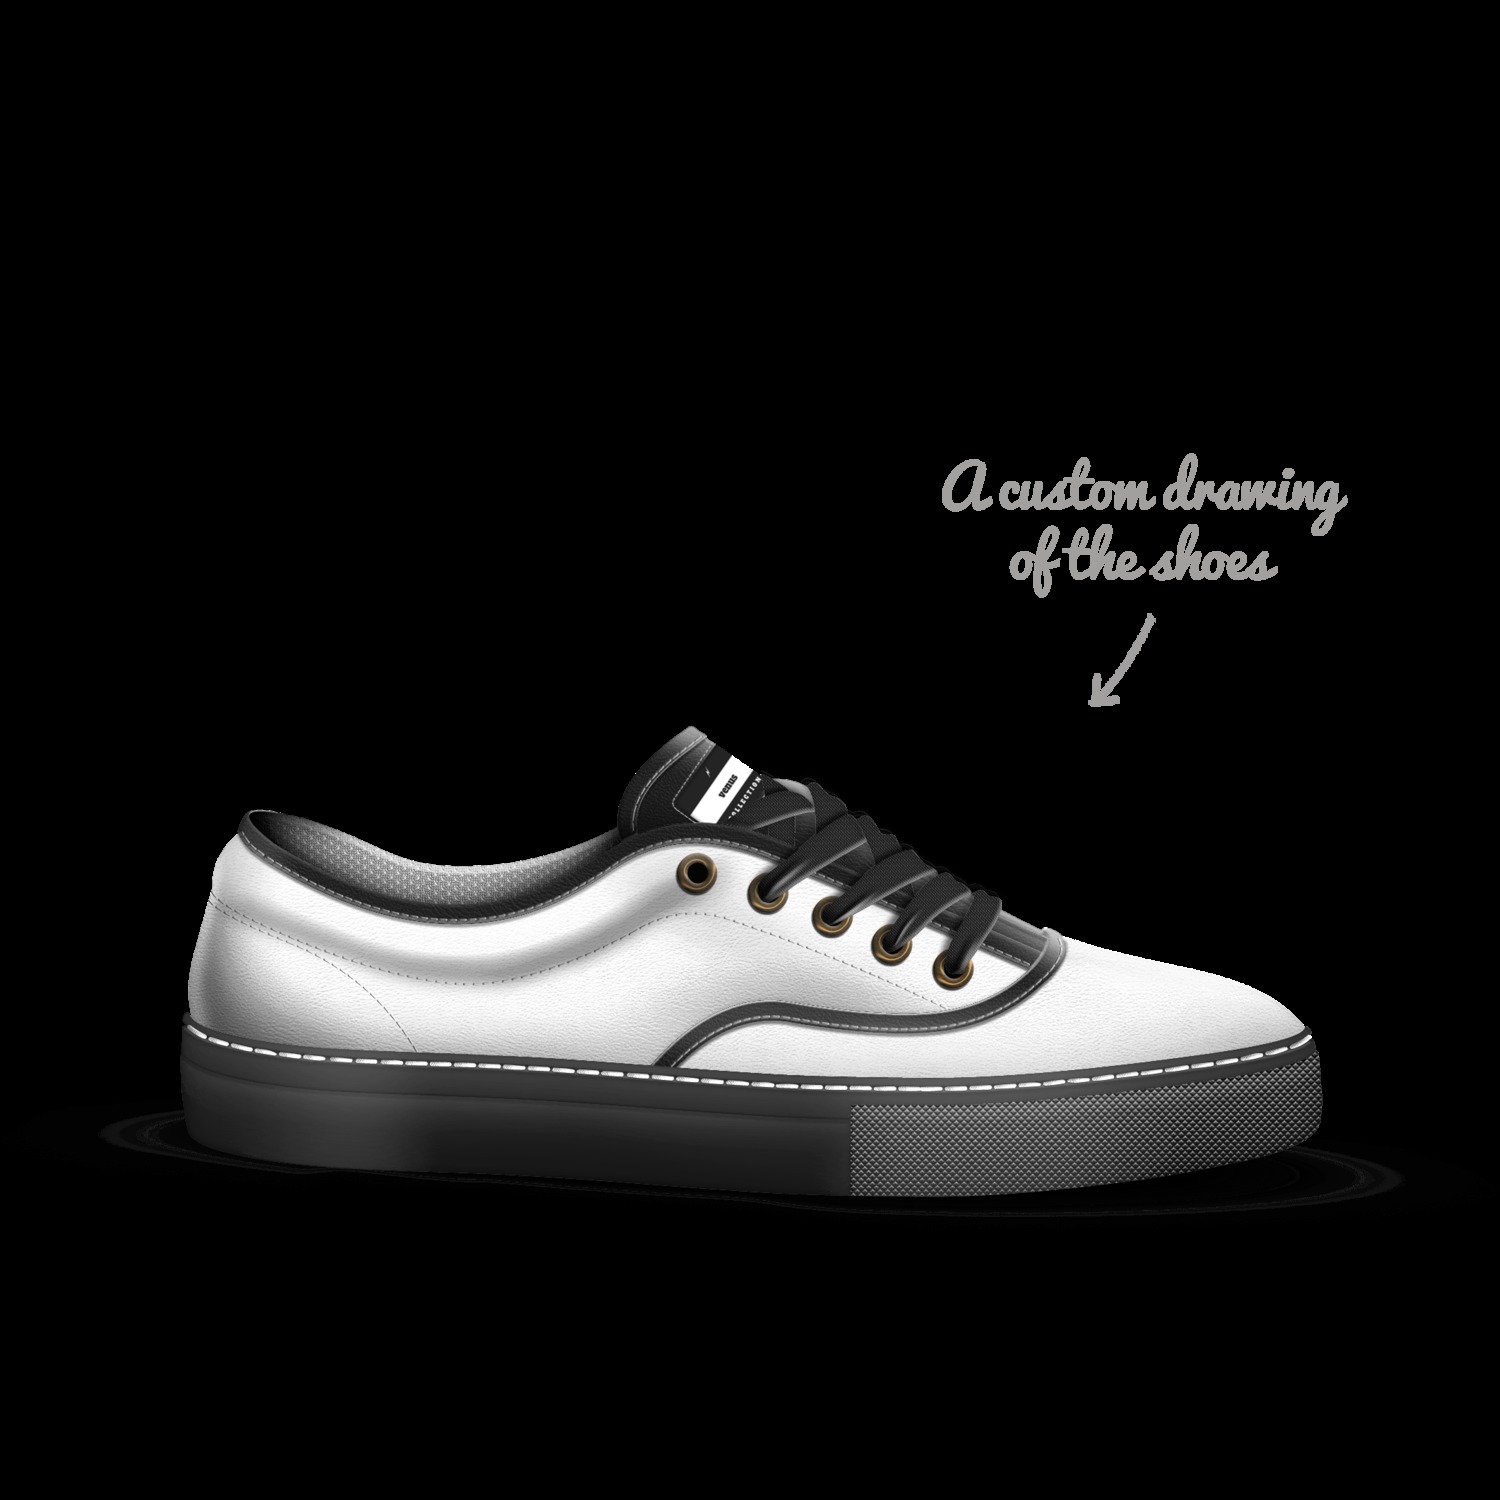 venus | A Custom Shoe concept by Teresa